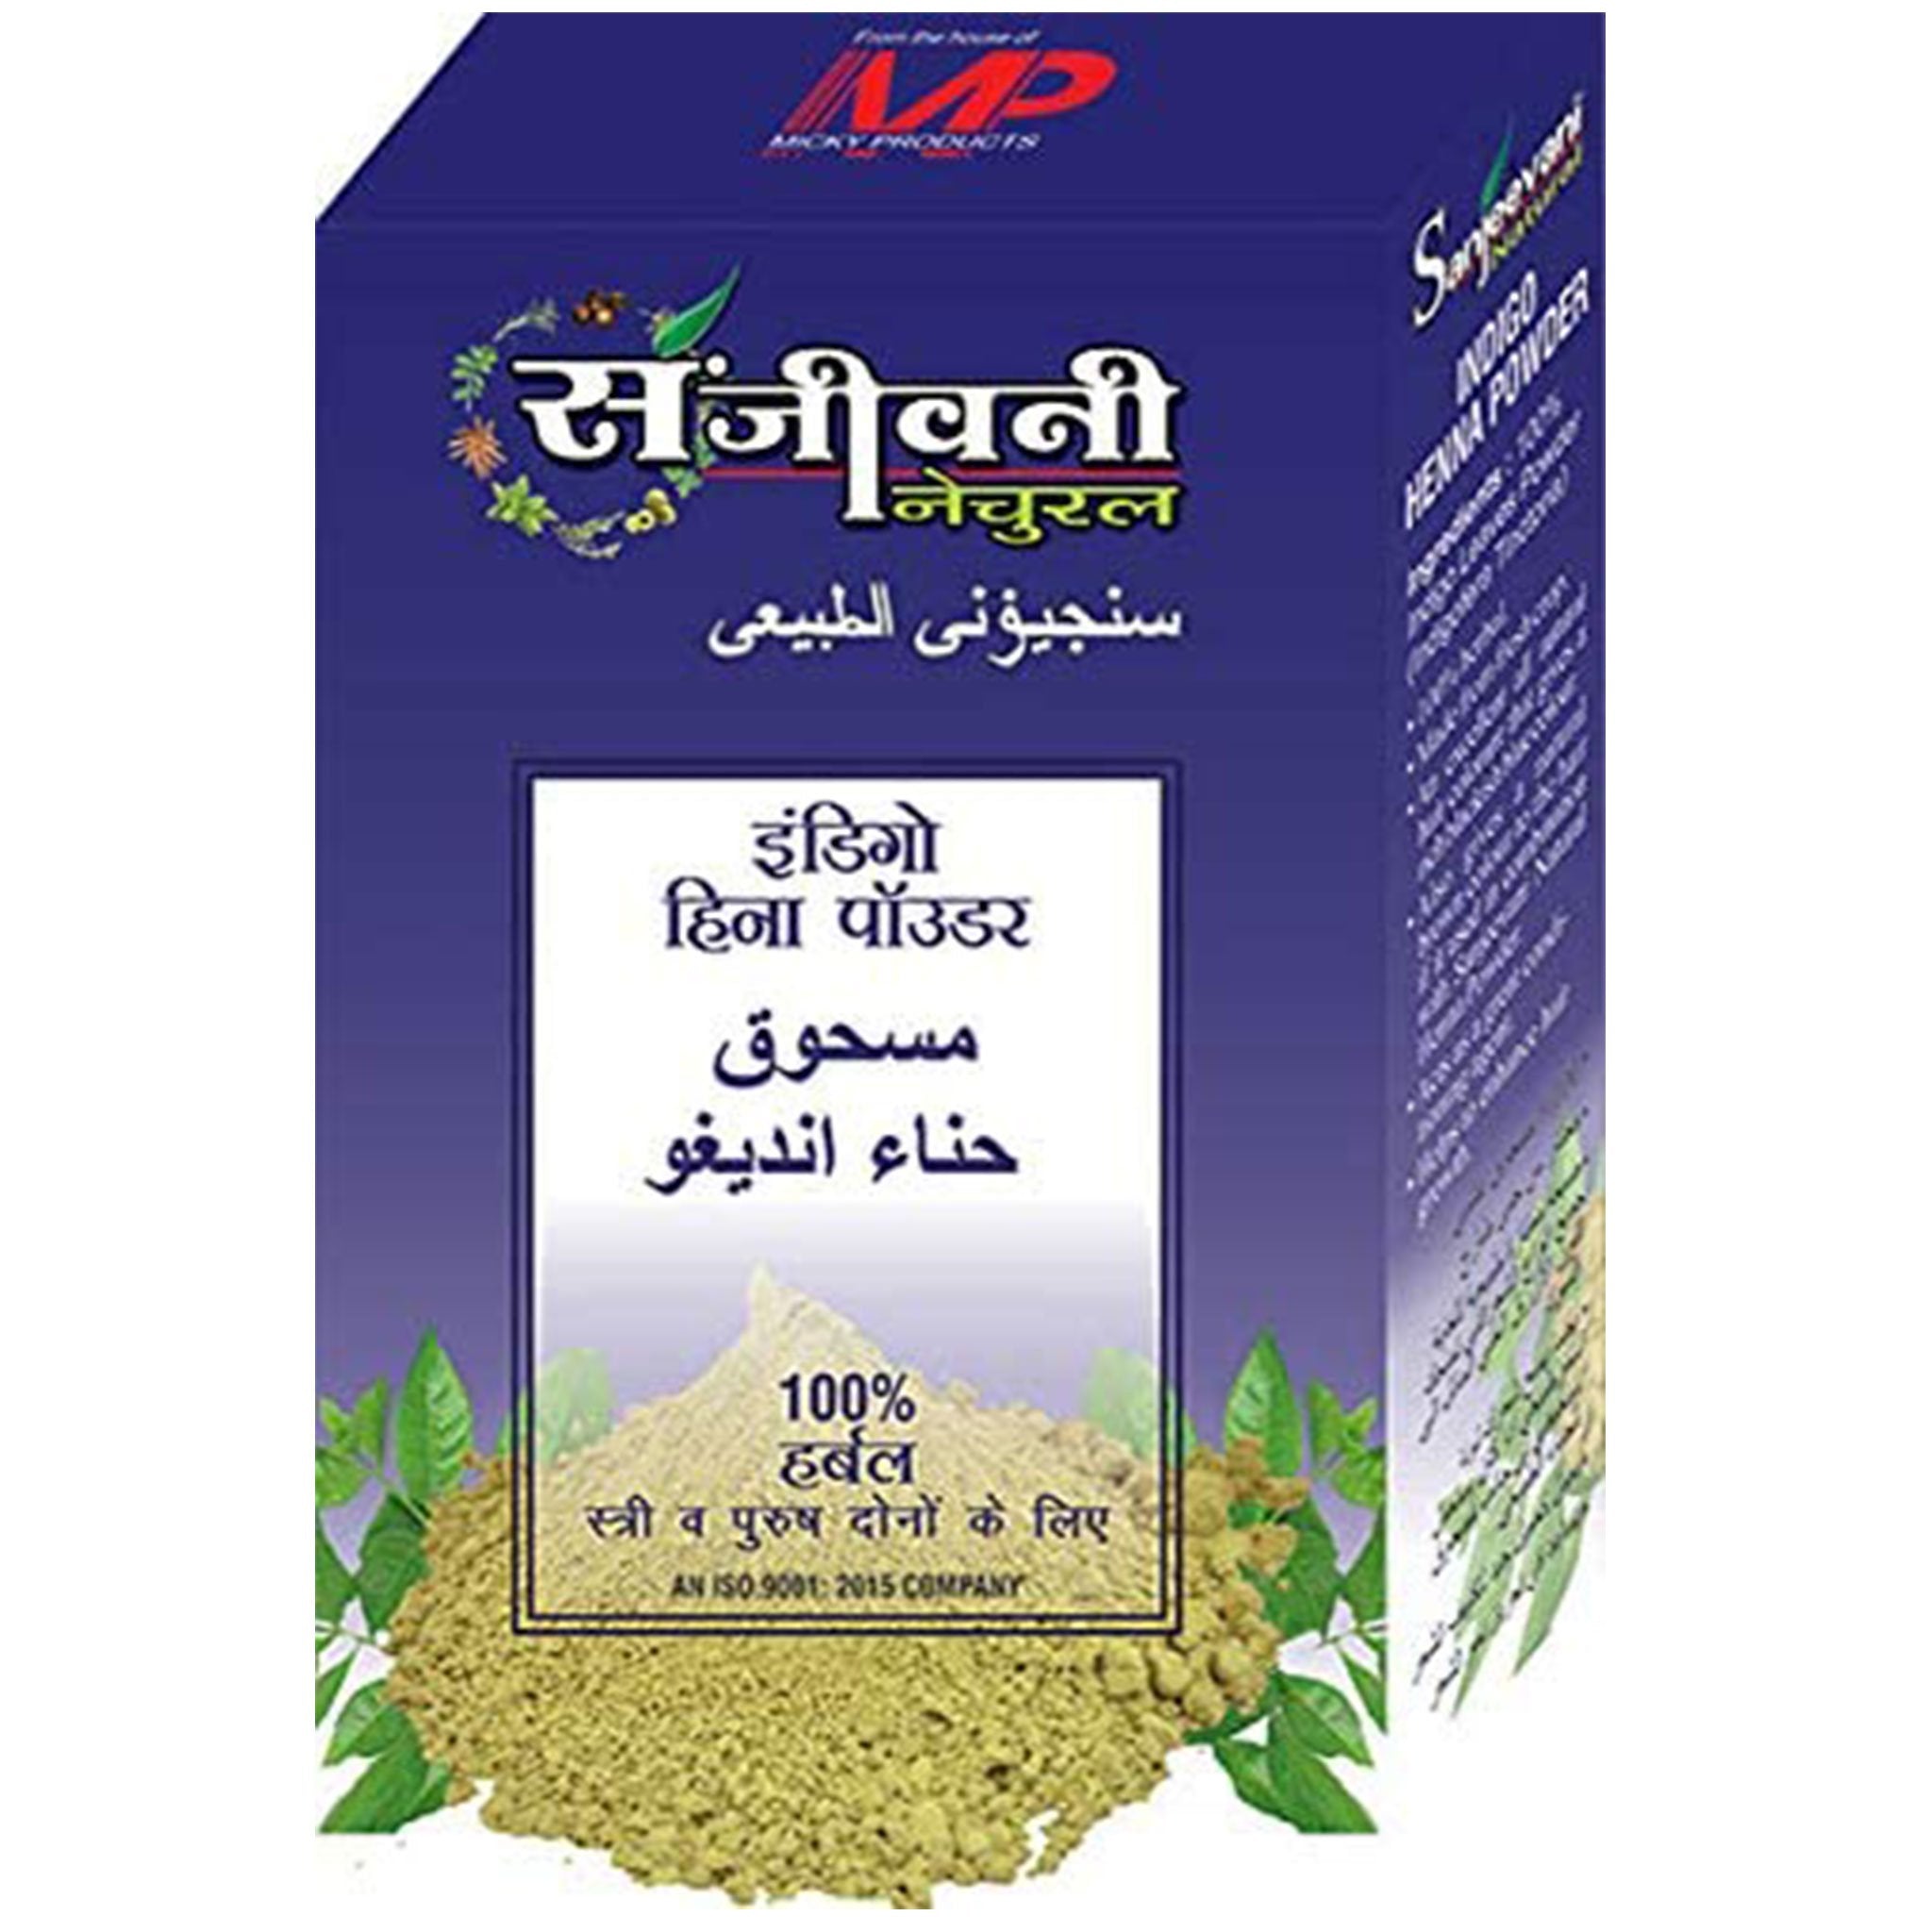 Sanjeevani Hair Powder Indigo Leaf PowderNeelamari Powder 100gm Value Pack of 2 